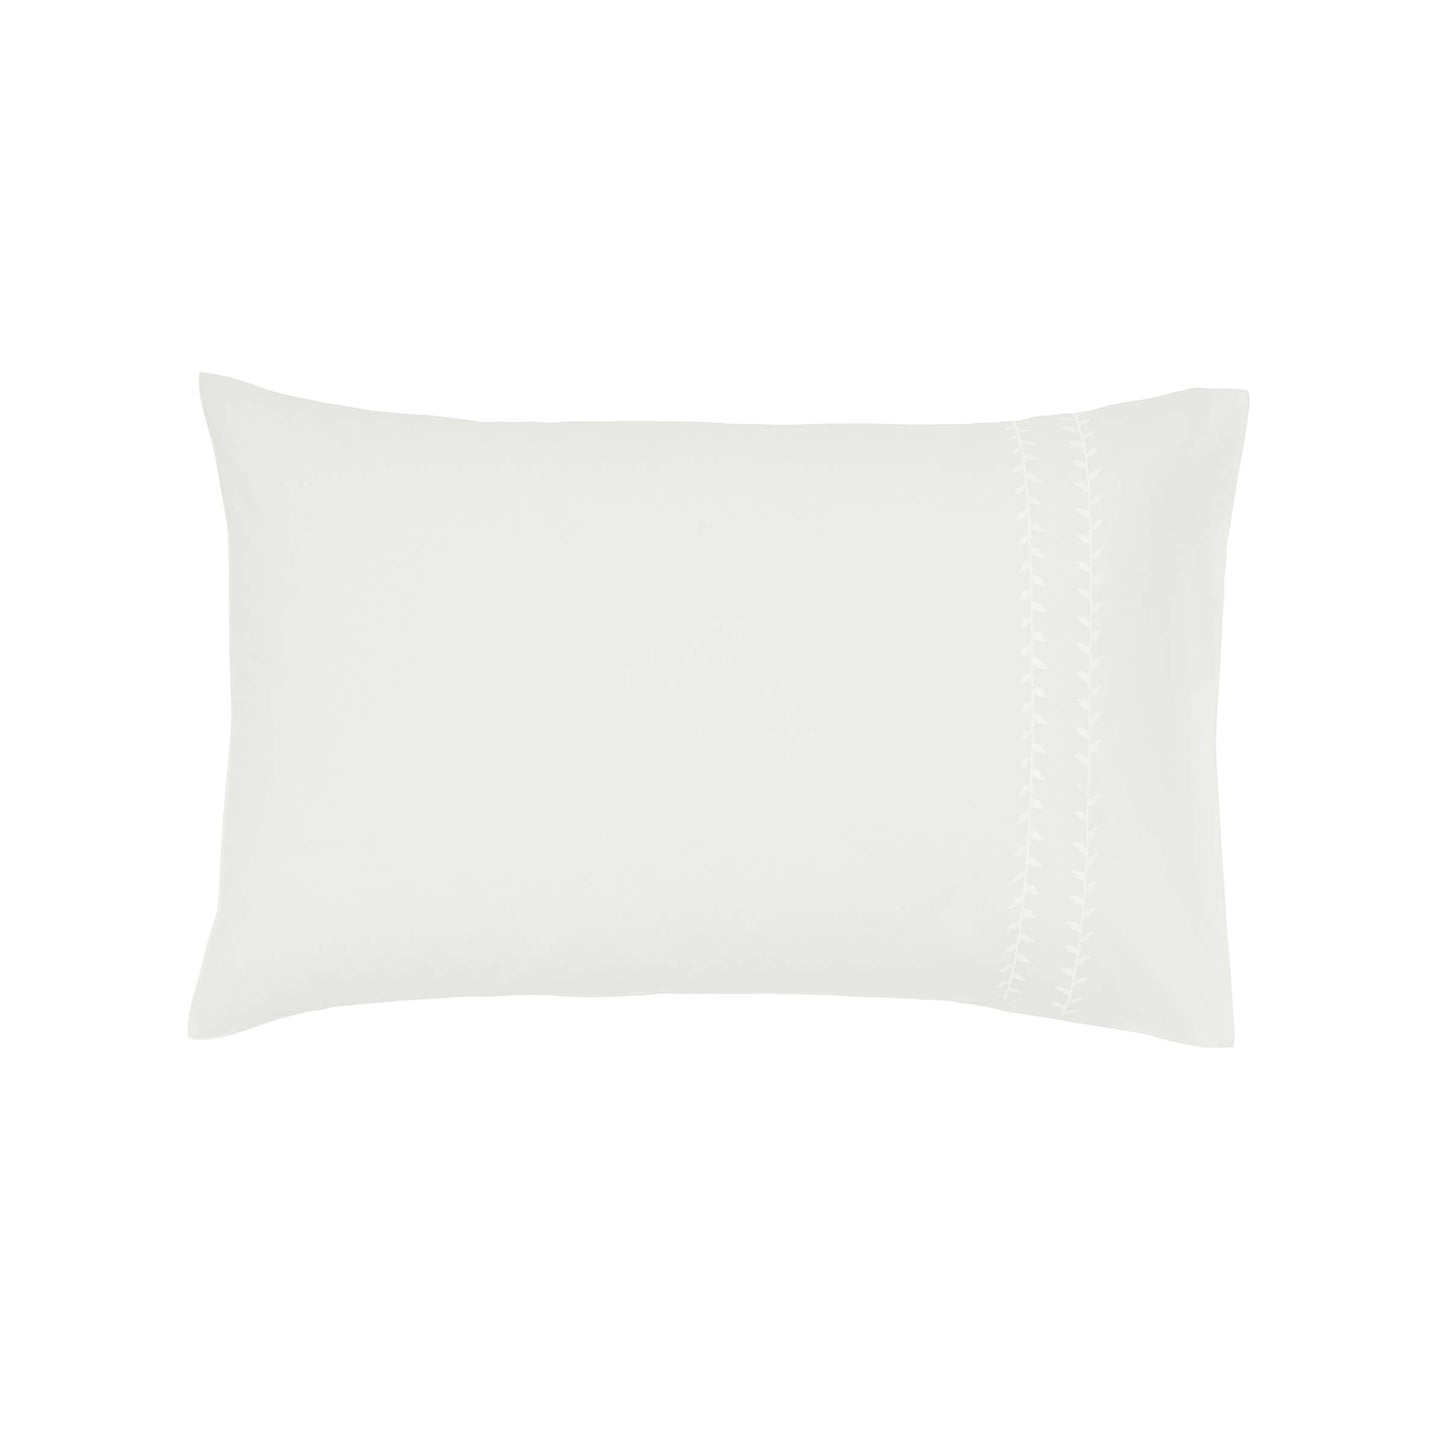 Esther Pair of Standard Pillowcases, White